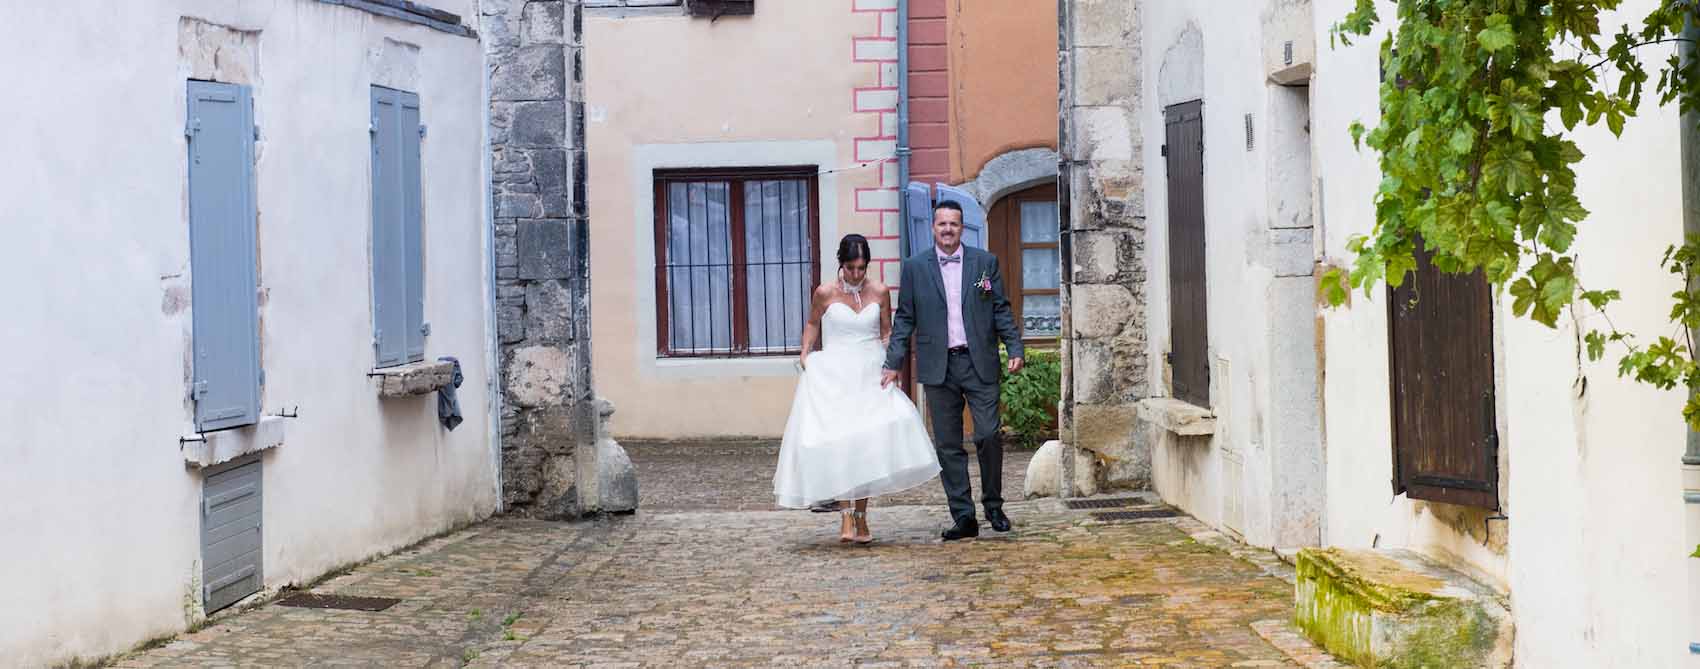 reportage-photo-de-mariage-lyon-Est-Chassieu - Olivia BLANCHIN